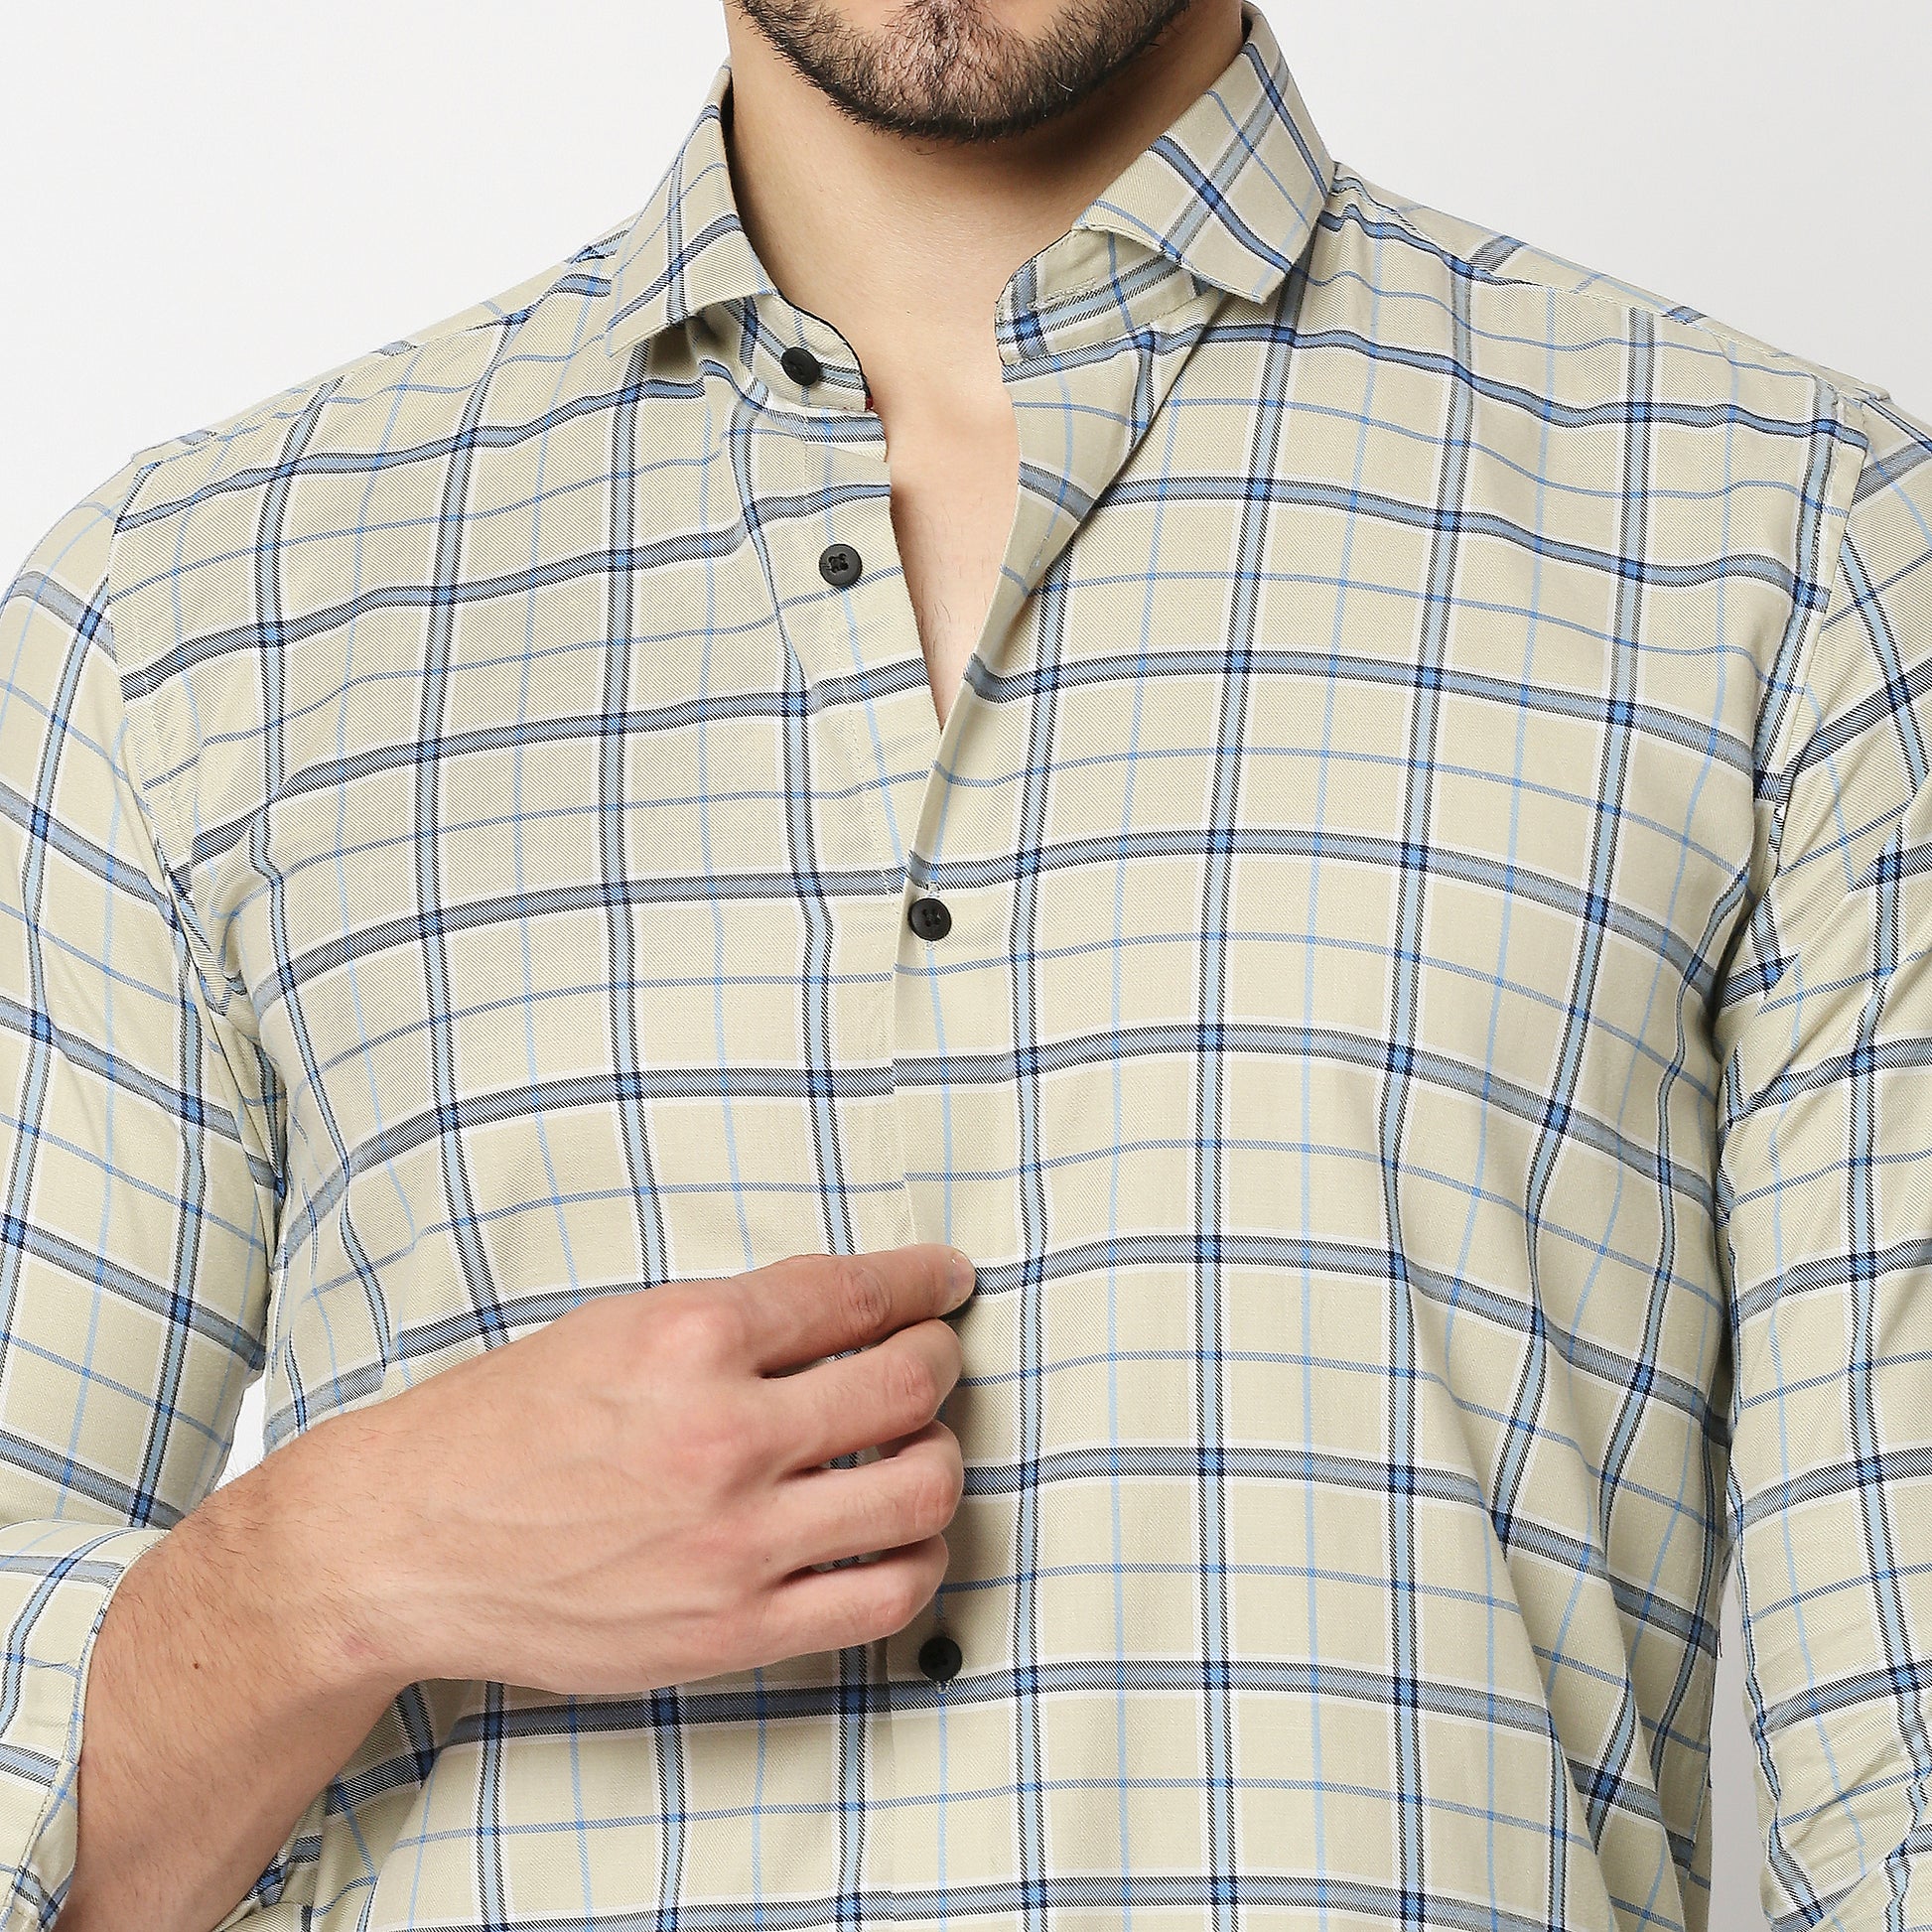 Fostino Light Olive  Checks  Full Sleeves Shirt - Fostino - Shirts & Tops